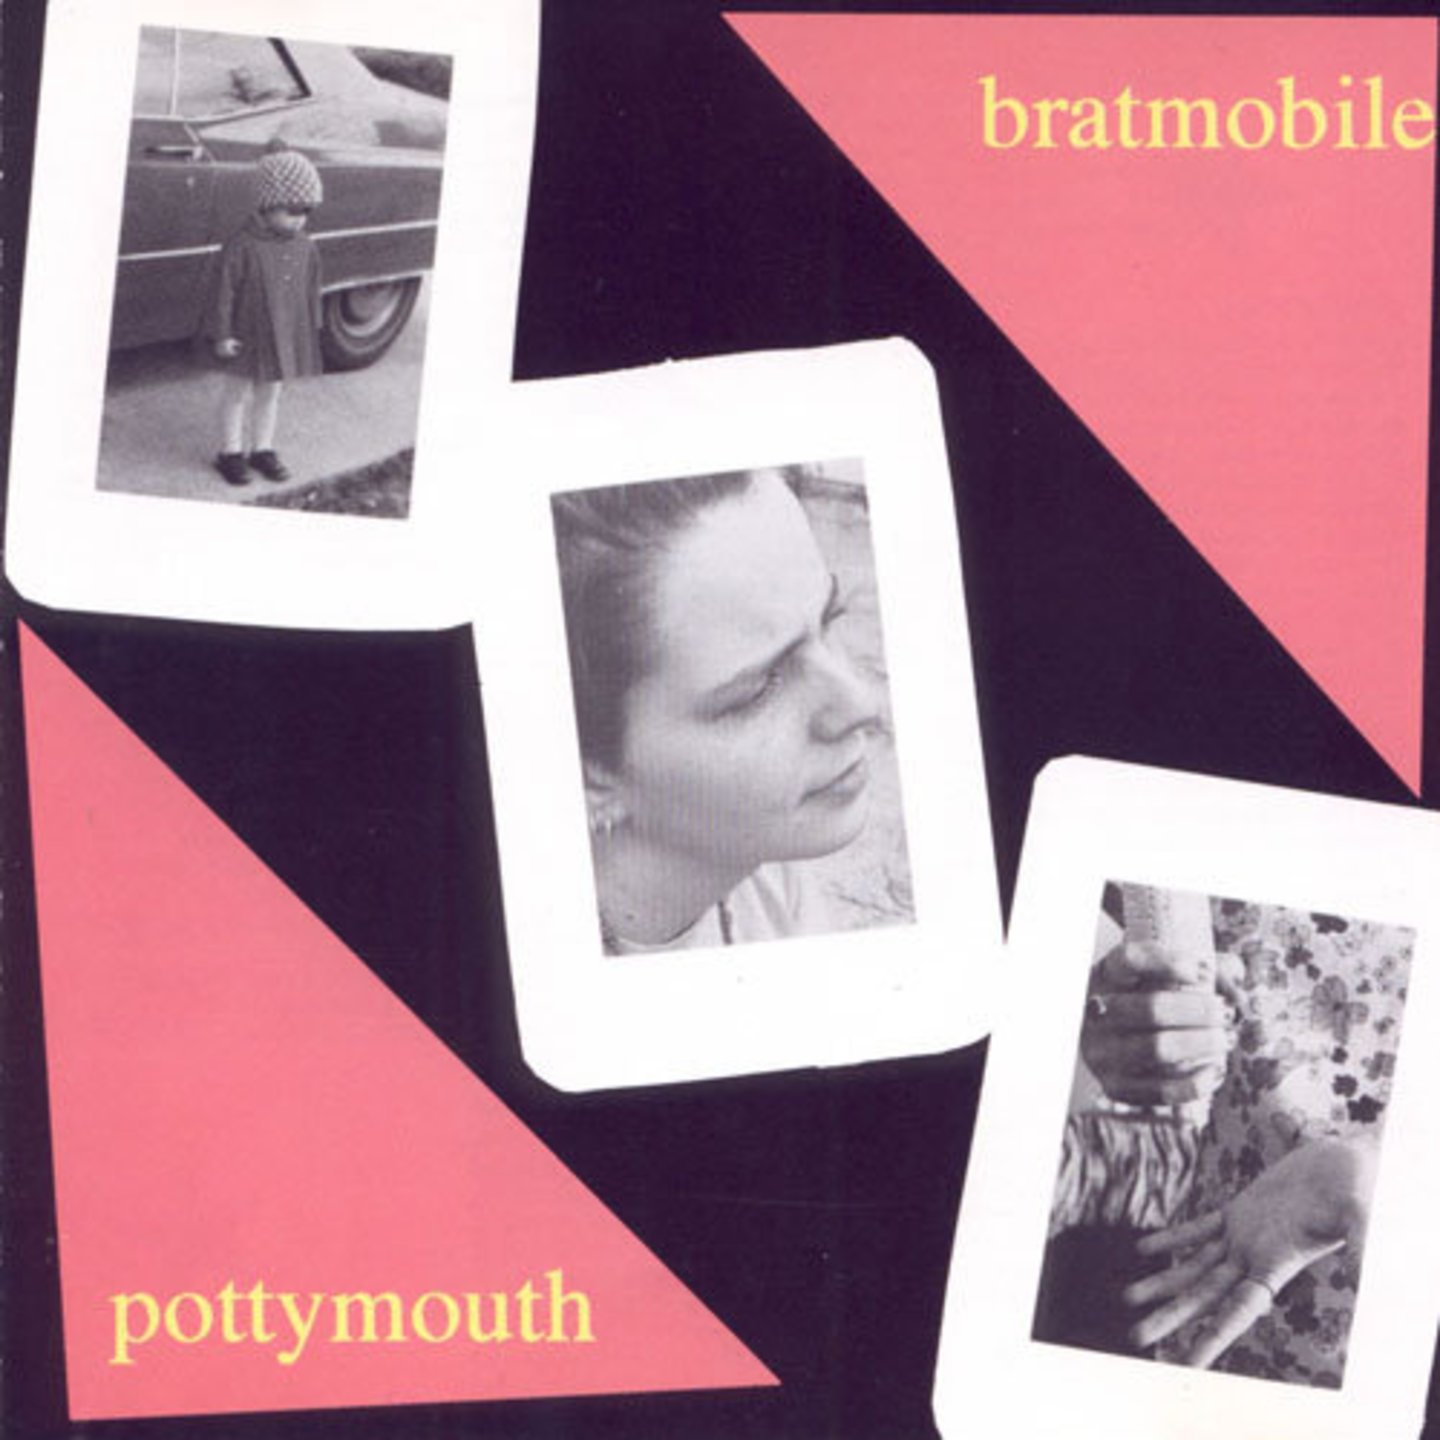 BRATMOBILE - Pottymouth LP